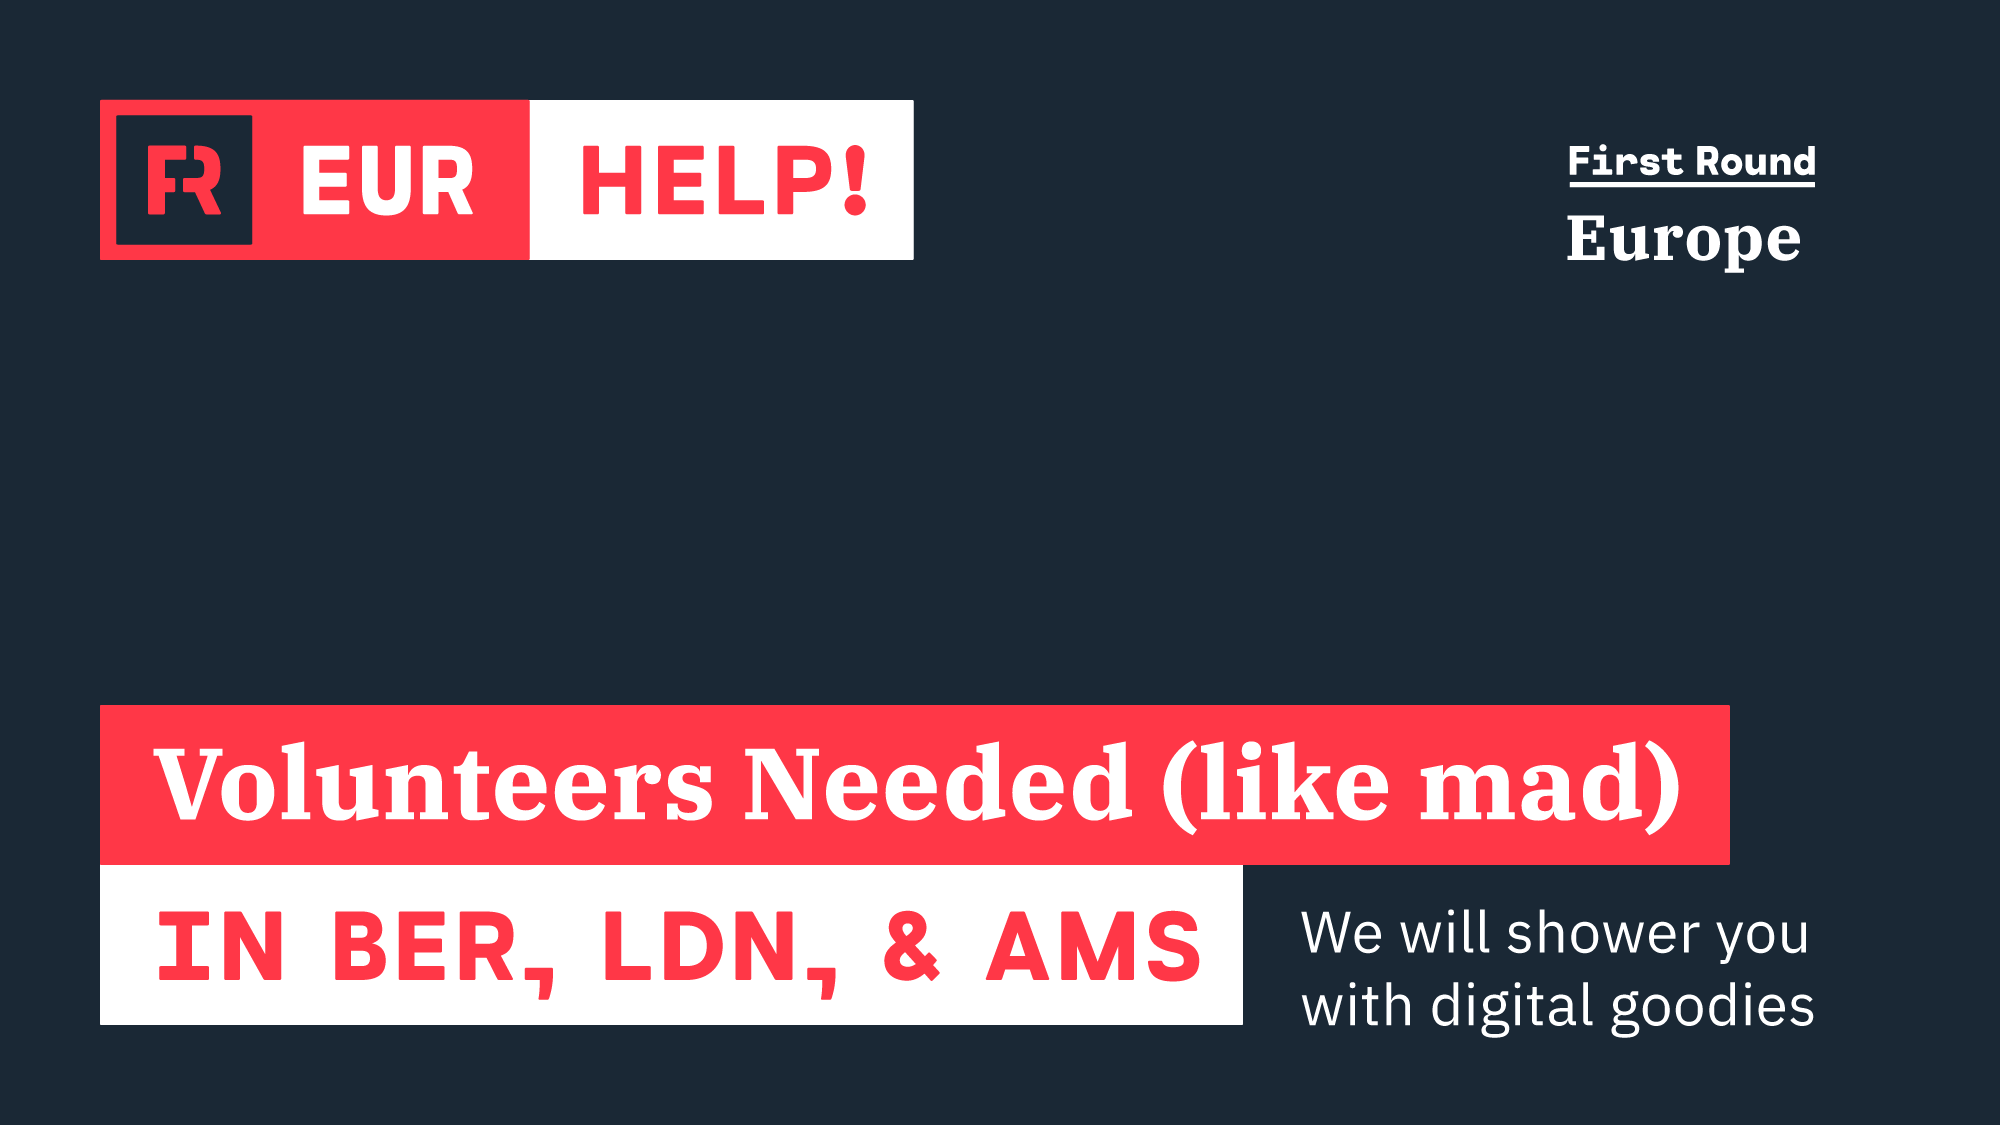 First Round Europe: Volunteers Needed!